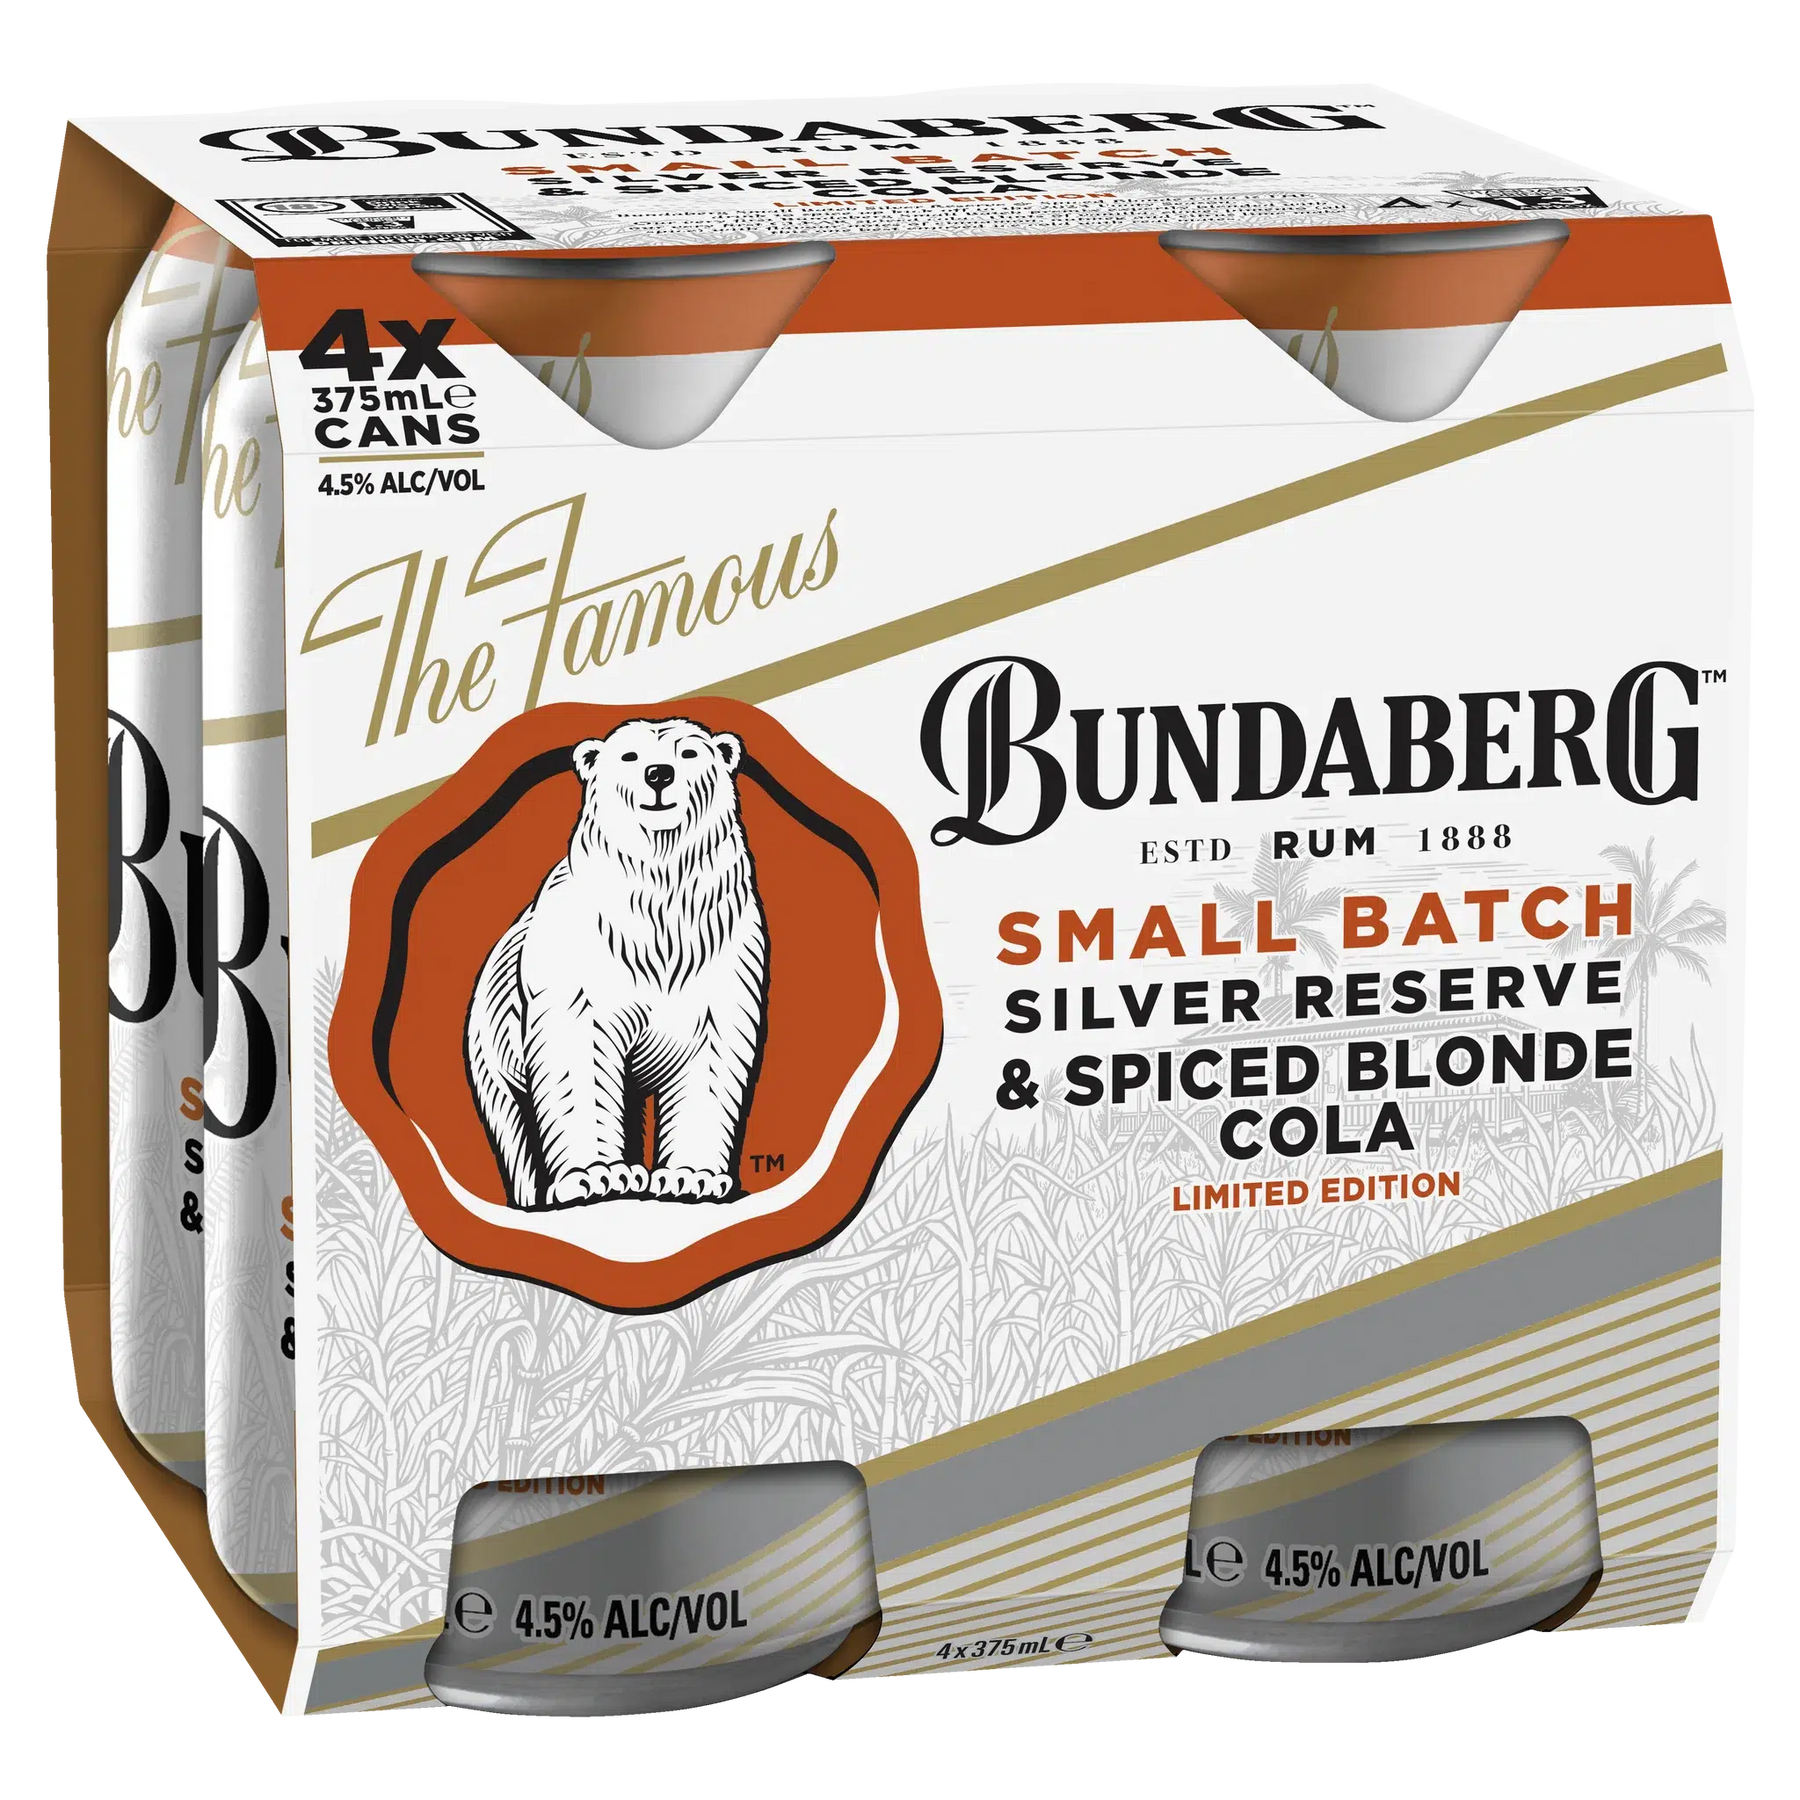 Bundaberg Small Batch Silver Reserve & Spiced Blonde Cola 375ml